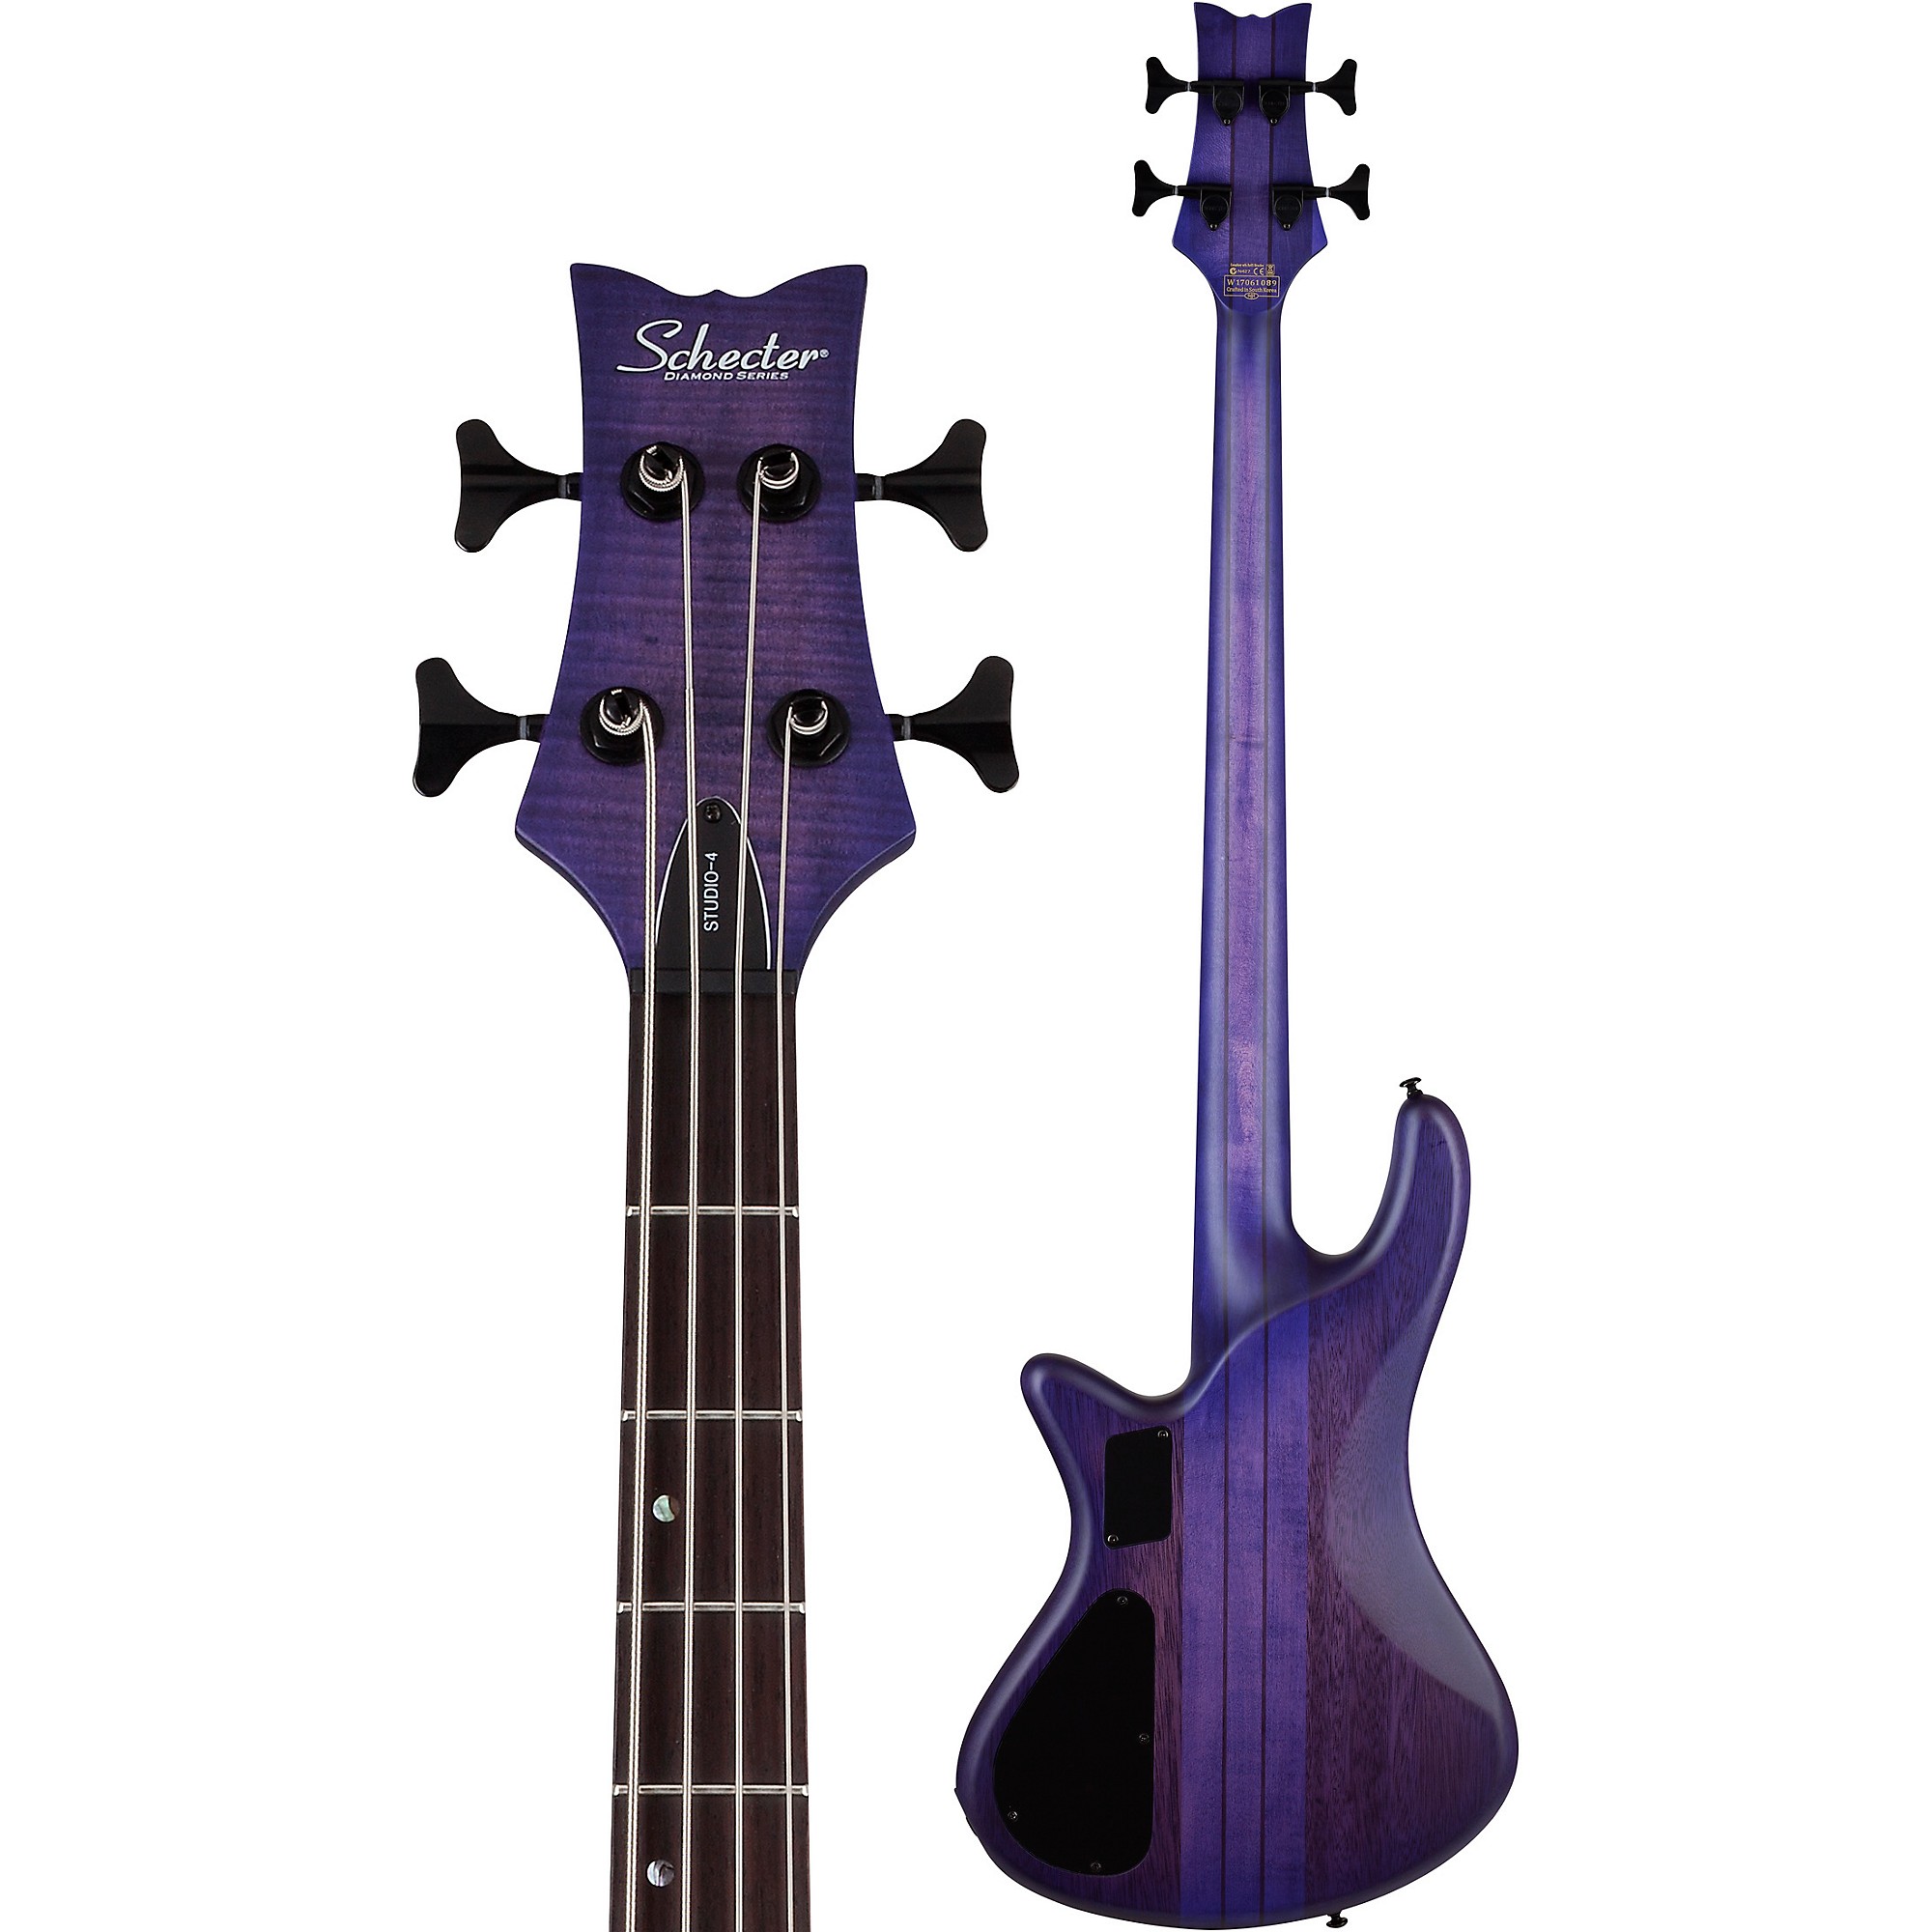 Schecter Guitar Research Limited-Edition Stiletto Studio-4 Bass 